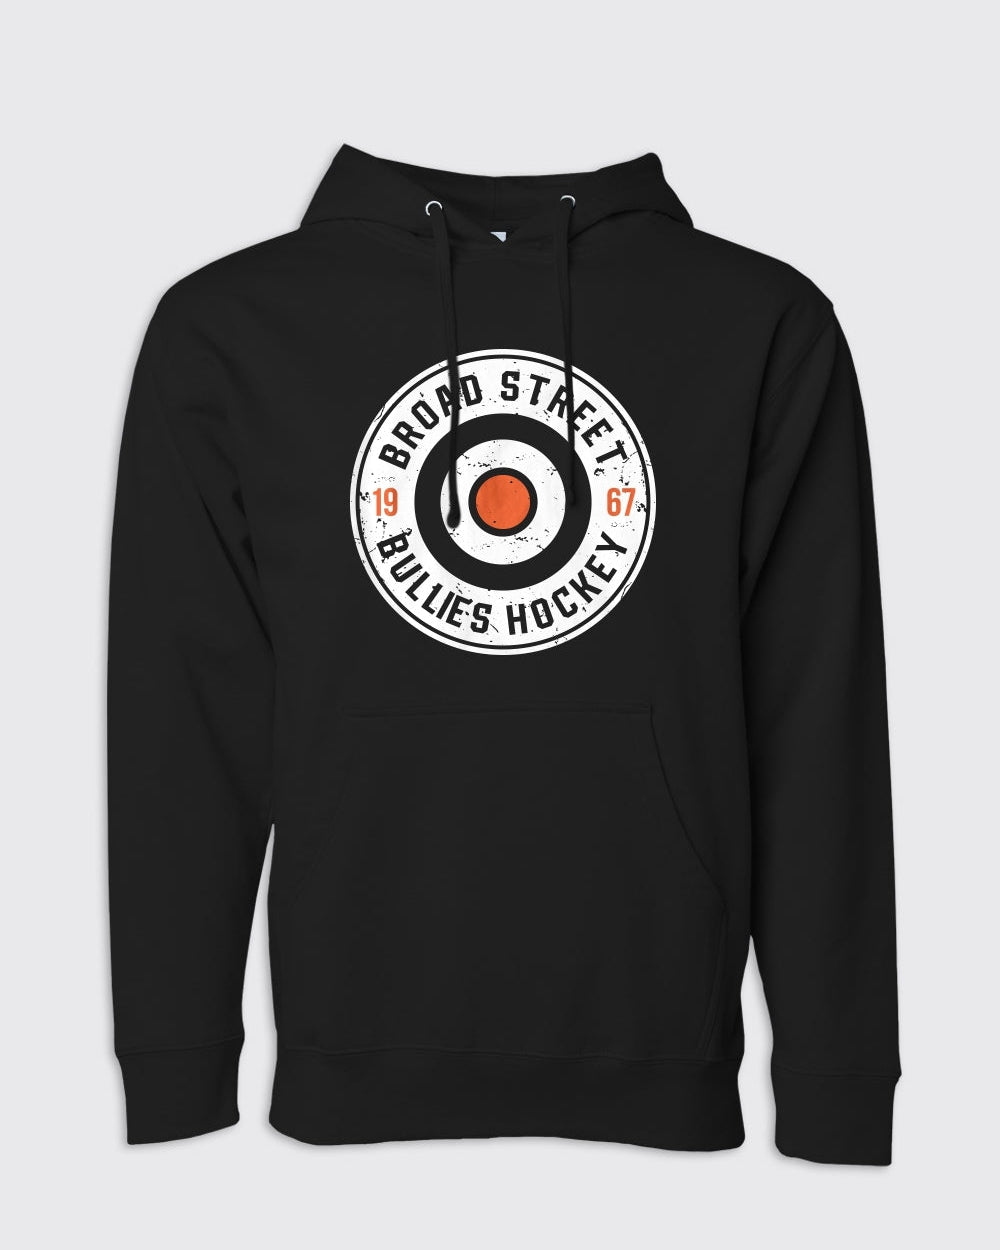 Philadelphia Flyers-Broad Street Bullies Hockey Hoodie-Black-Philly Sports Shirts